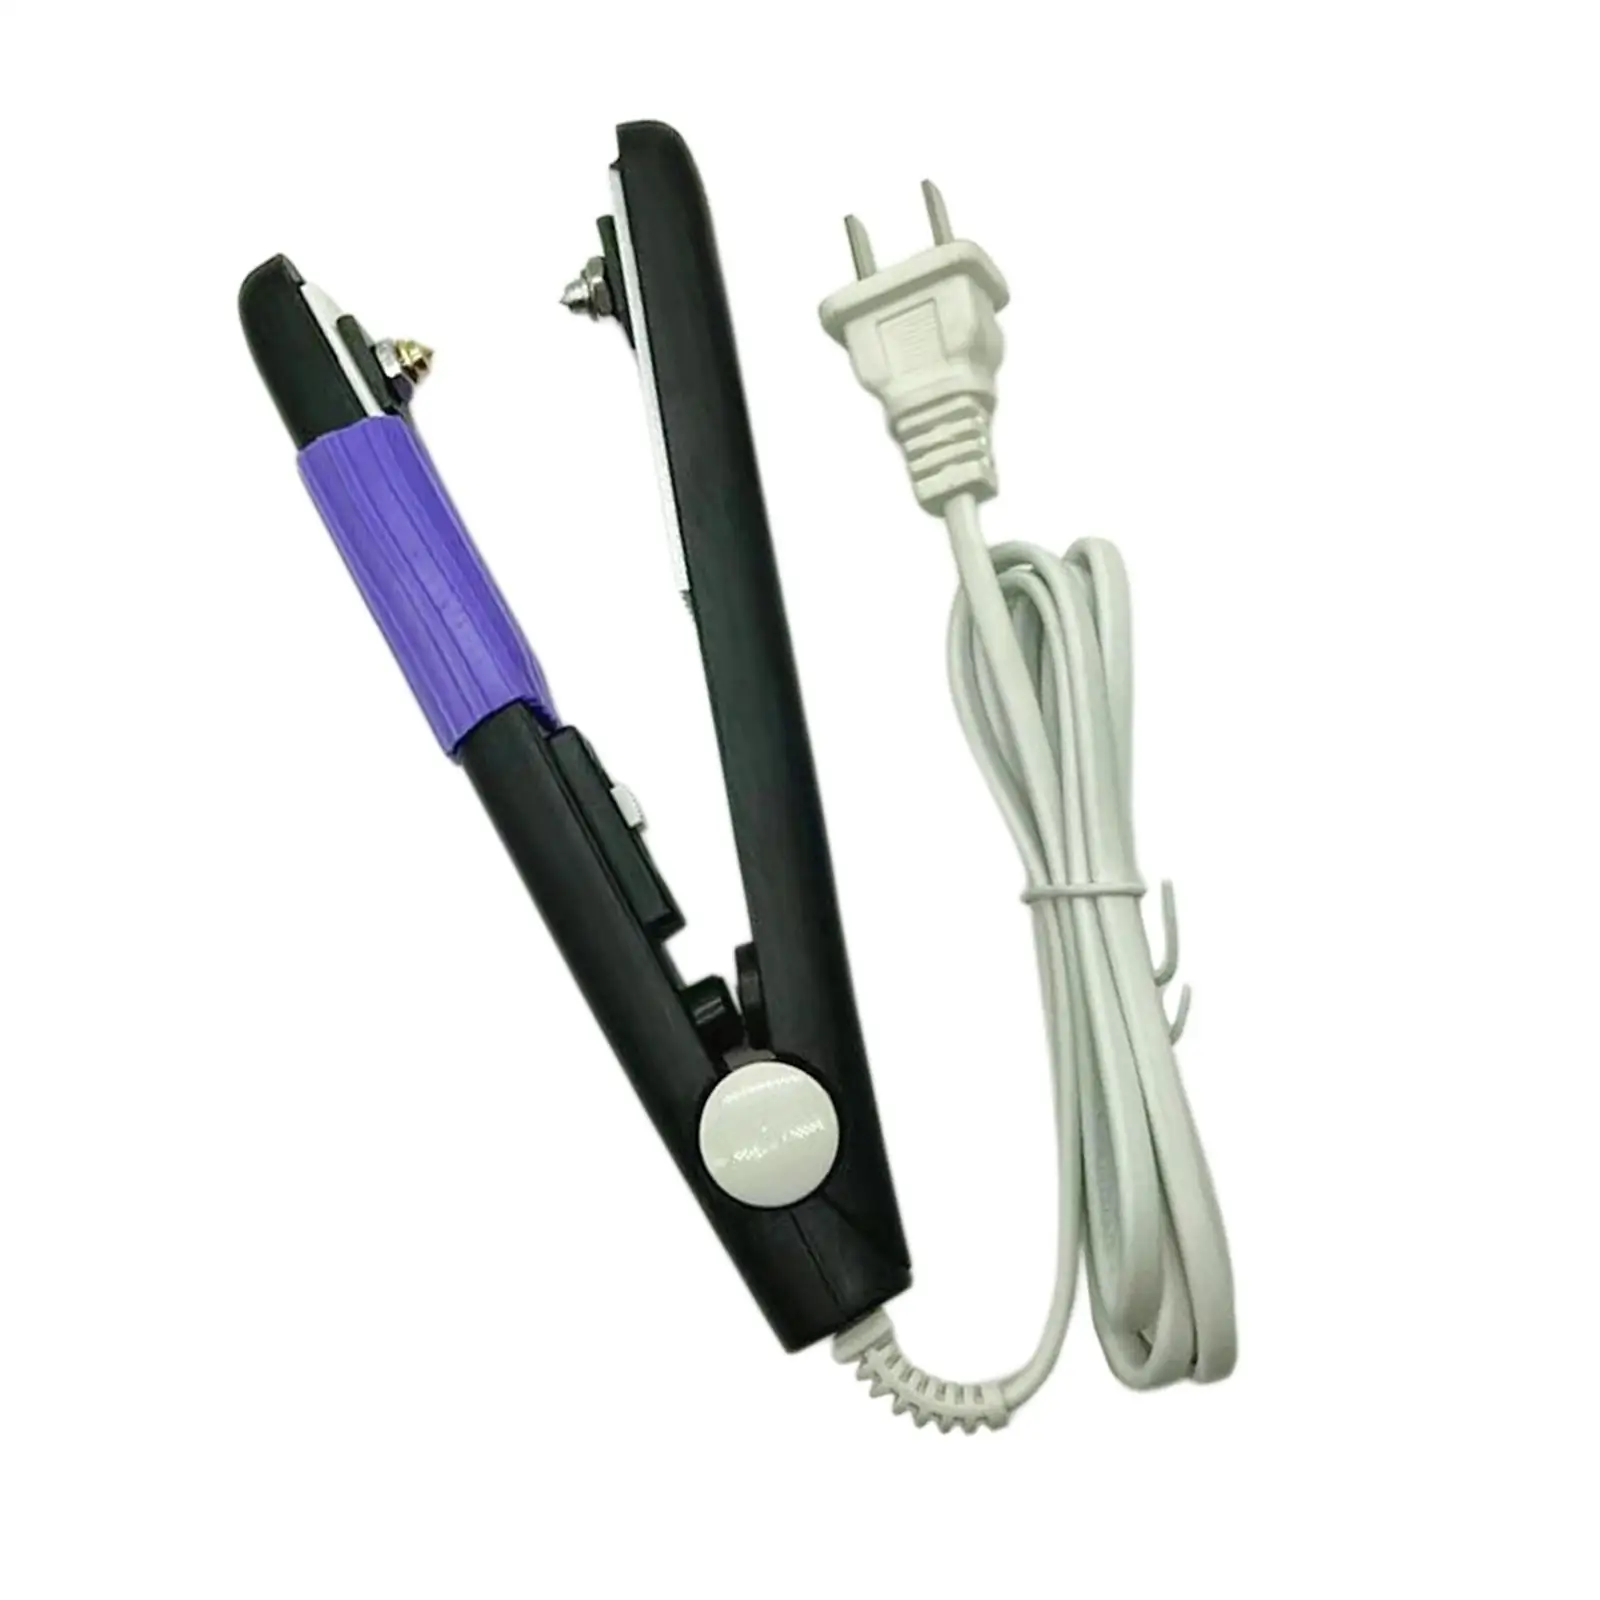 Handheld Heat Press Badminton Racket Pliers Tennis Restring Equipment, Clamping Tool Tennis Racquet Clamp Plier for Repairing